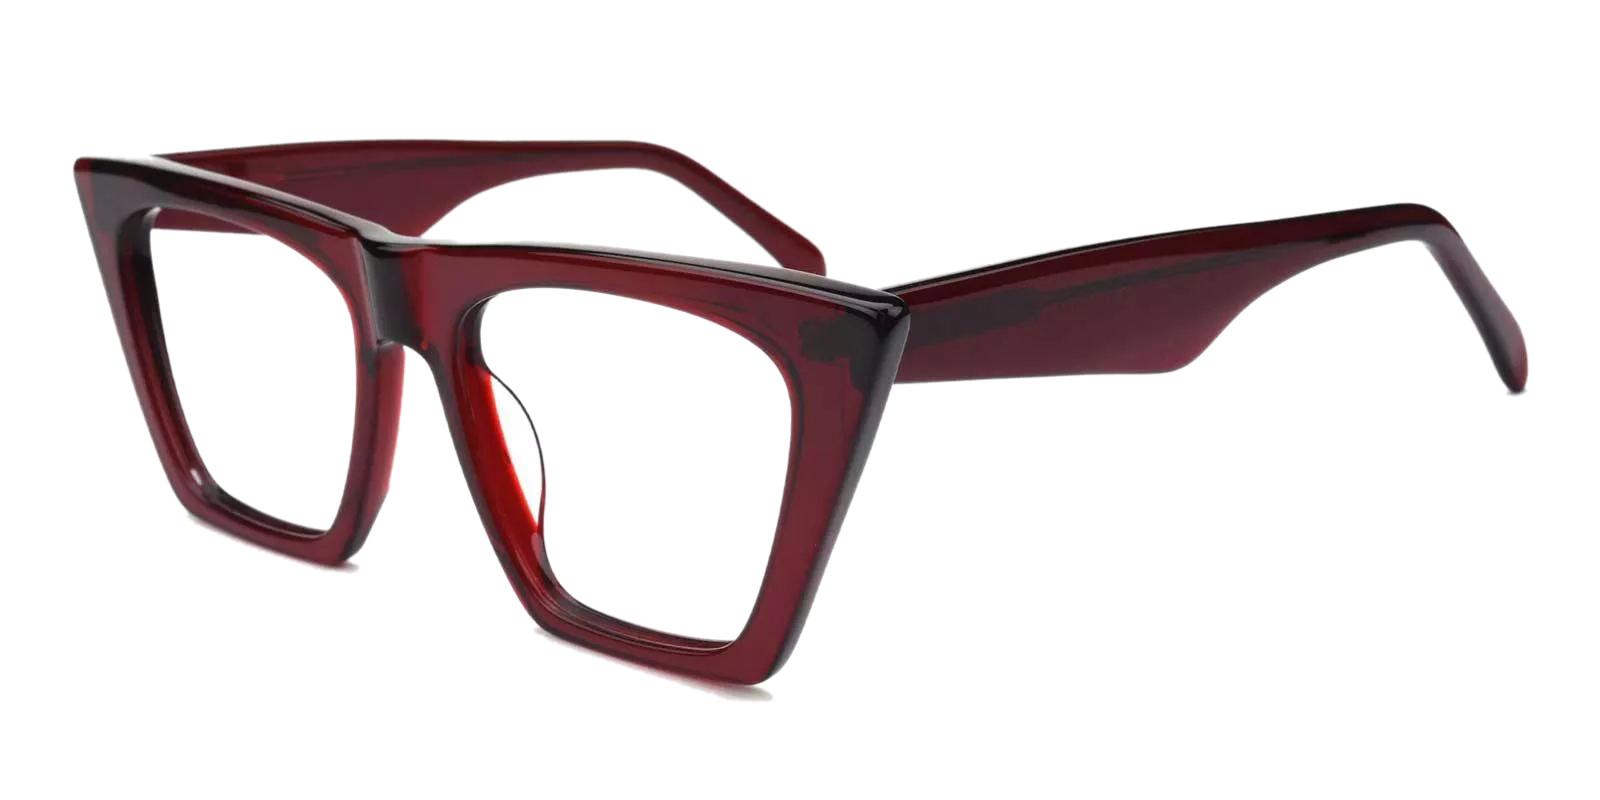 Haley Red Acetate UniversalBridgeFit , Fashion , Eyeglasses Frames from ABBE Glasses